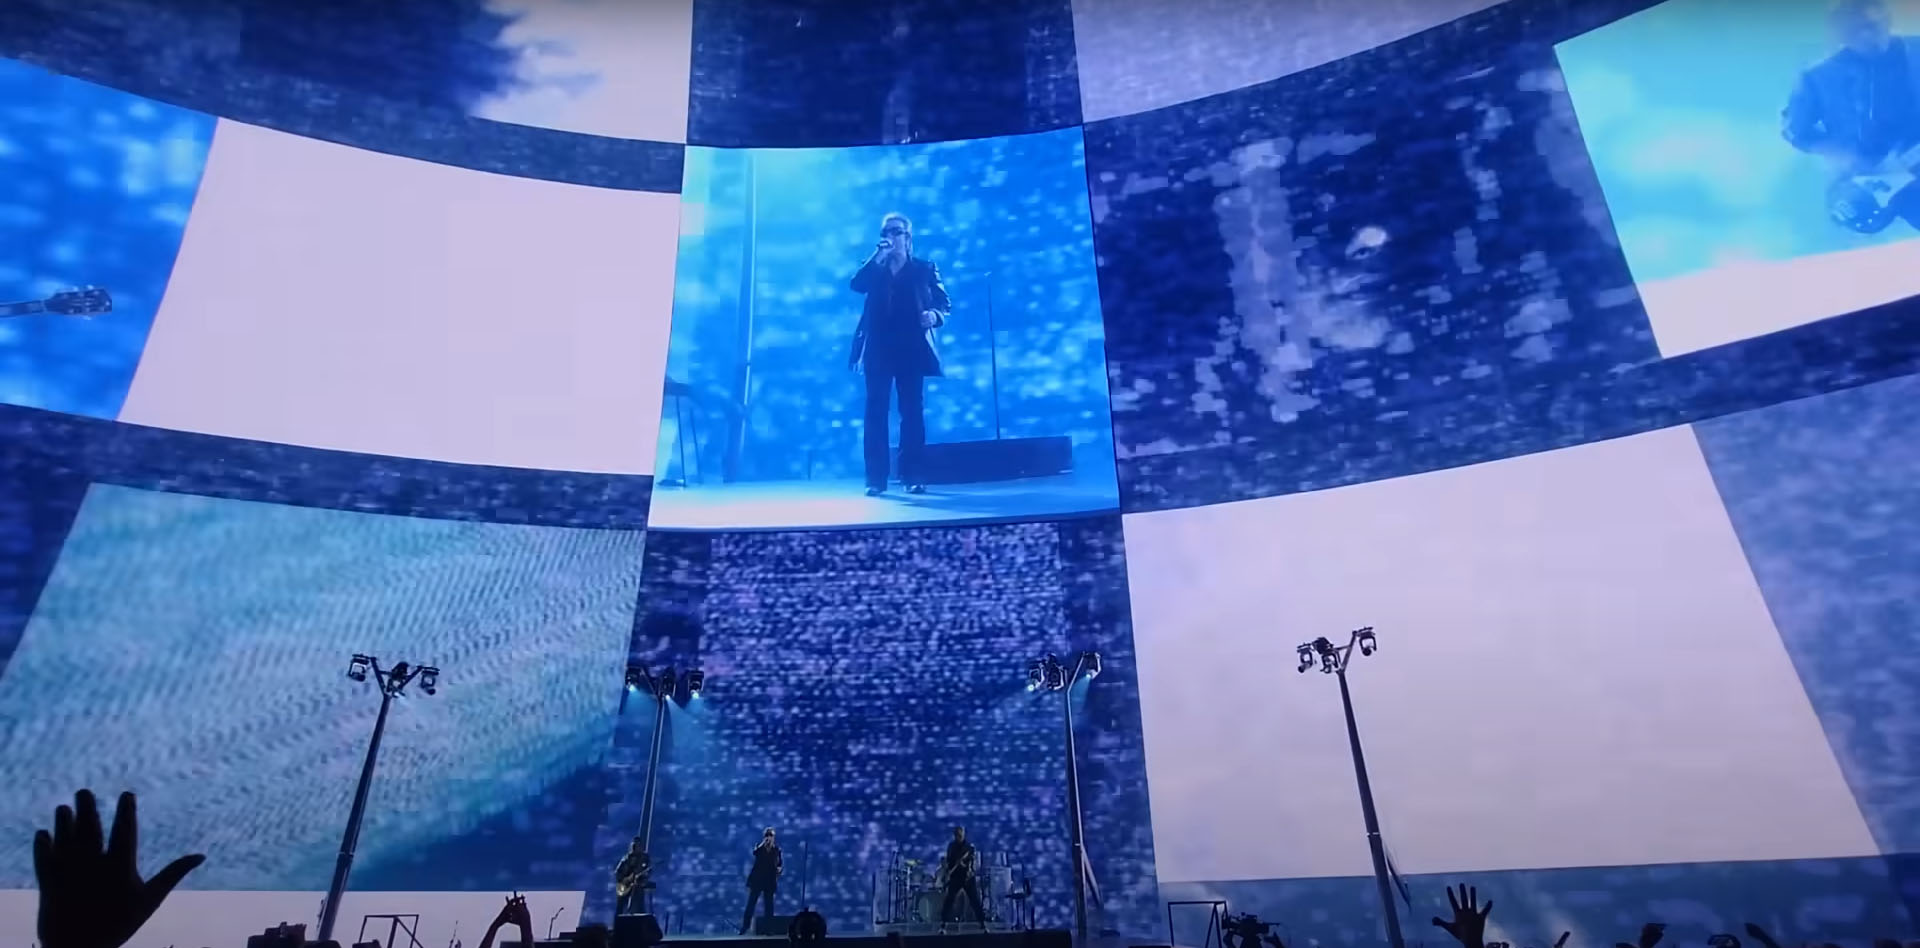 Концерт U2 дав старт першому шоу Sphere – величезного сферичного LED дисплея заввишки 112 метрів